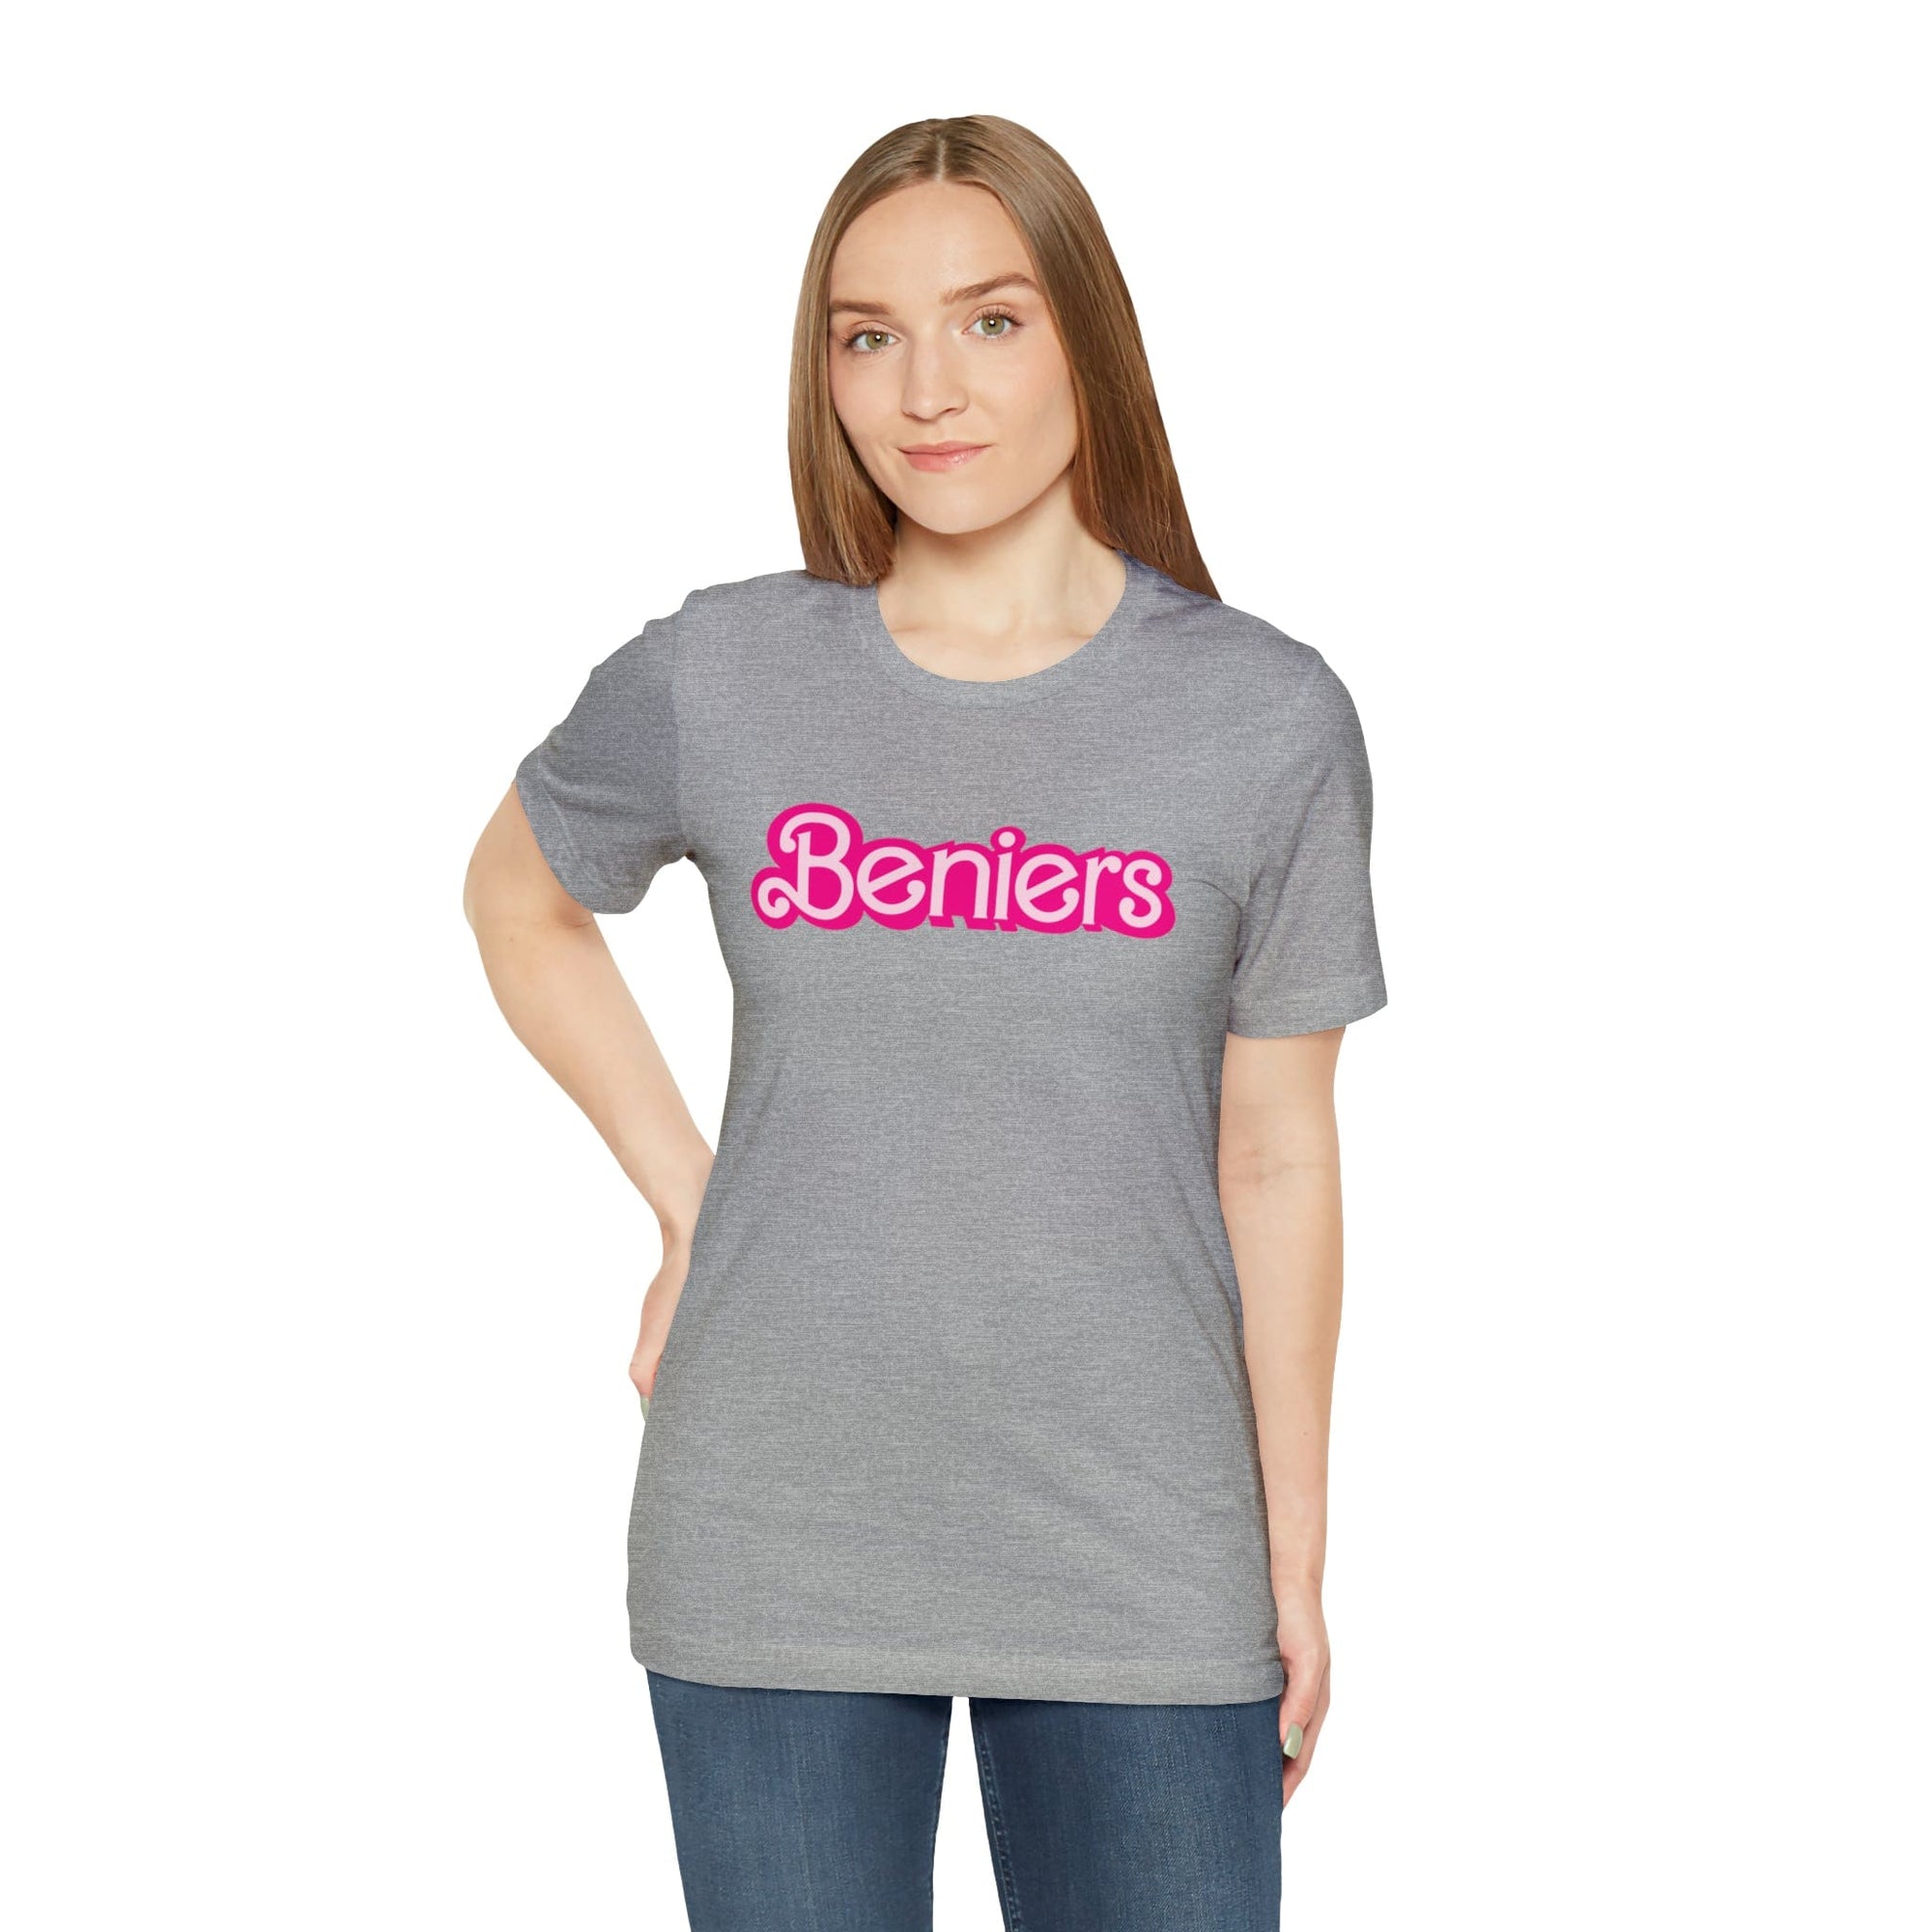 Beniers Barbie Shirt - Shop The Kraken